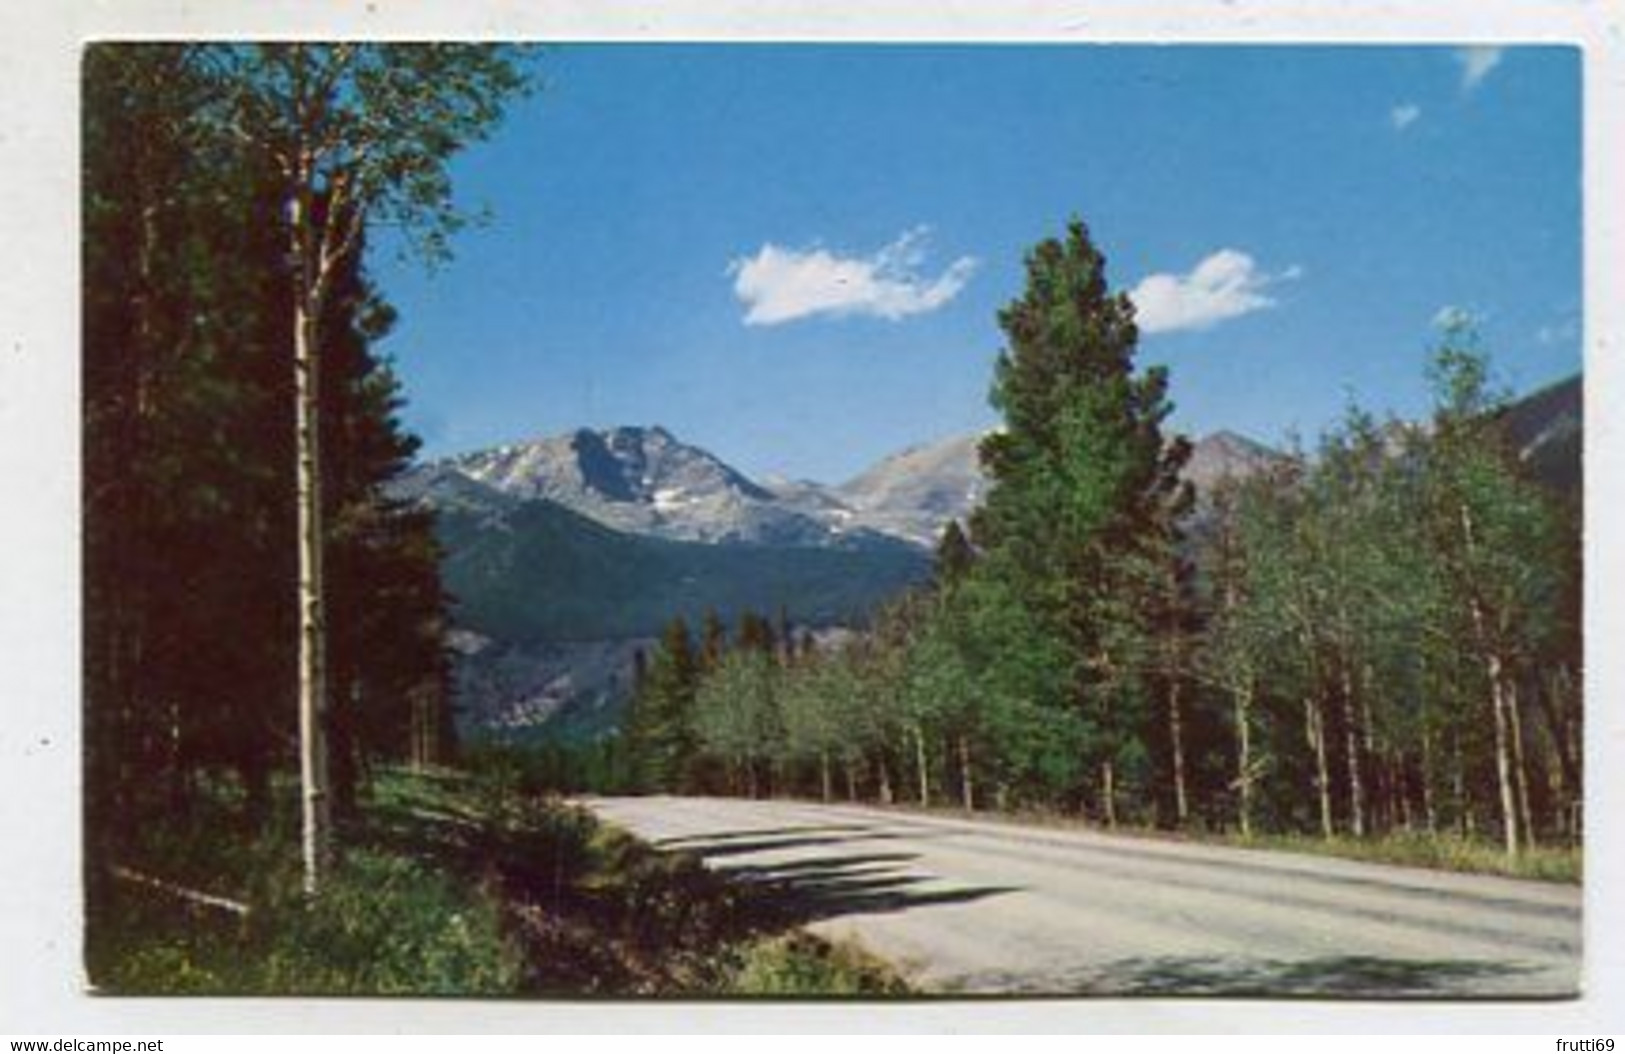 AK 116726 USA - Colorado - Mt. Ypsilon - Rocky Mountains